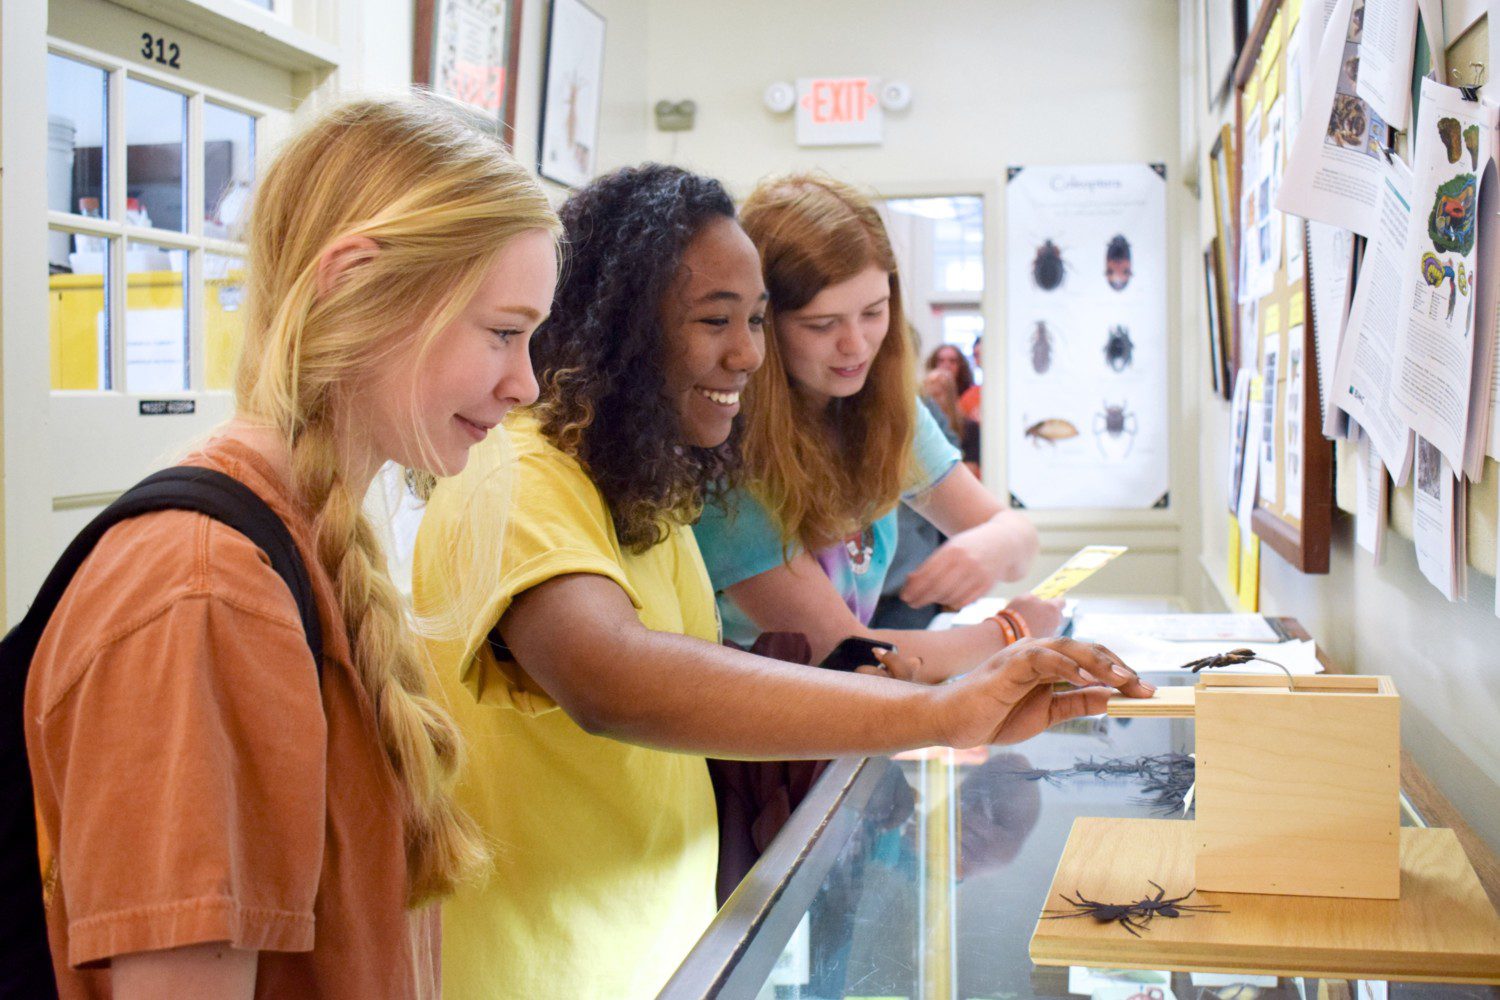 Students visit exhibits